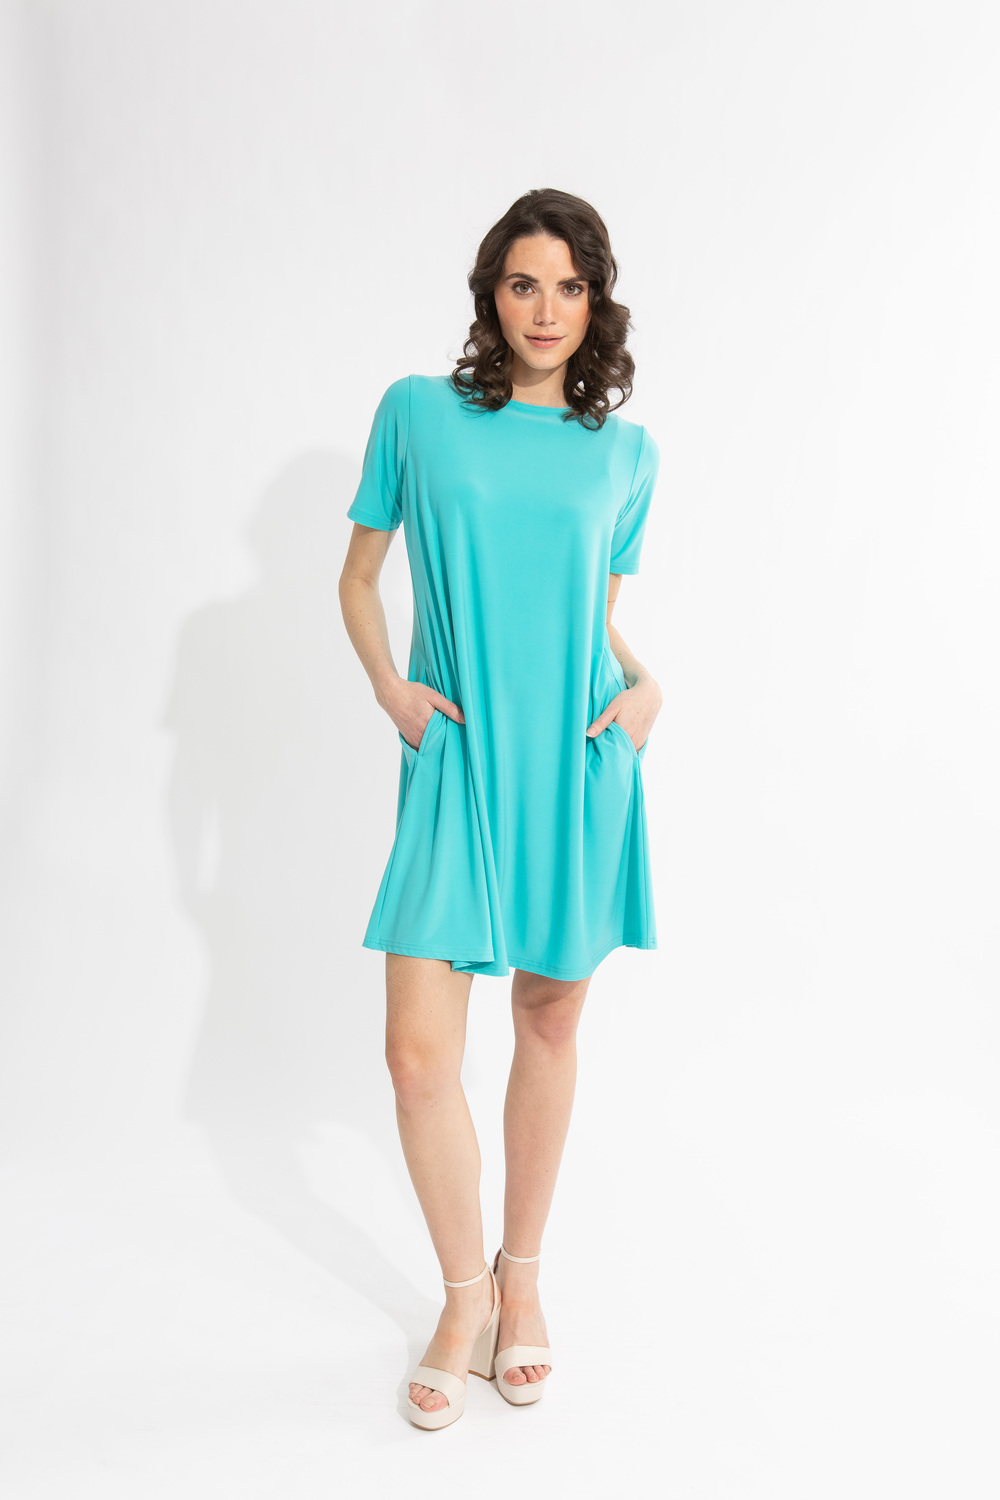 Short Sleeve T-Shirt Dress Style 2895S-1. Aqua